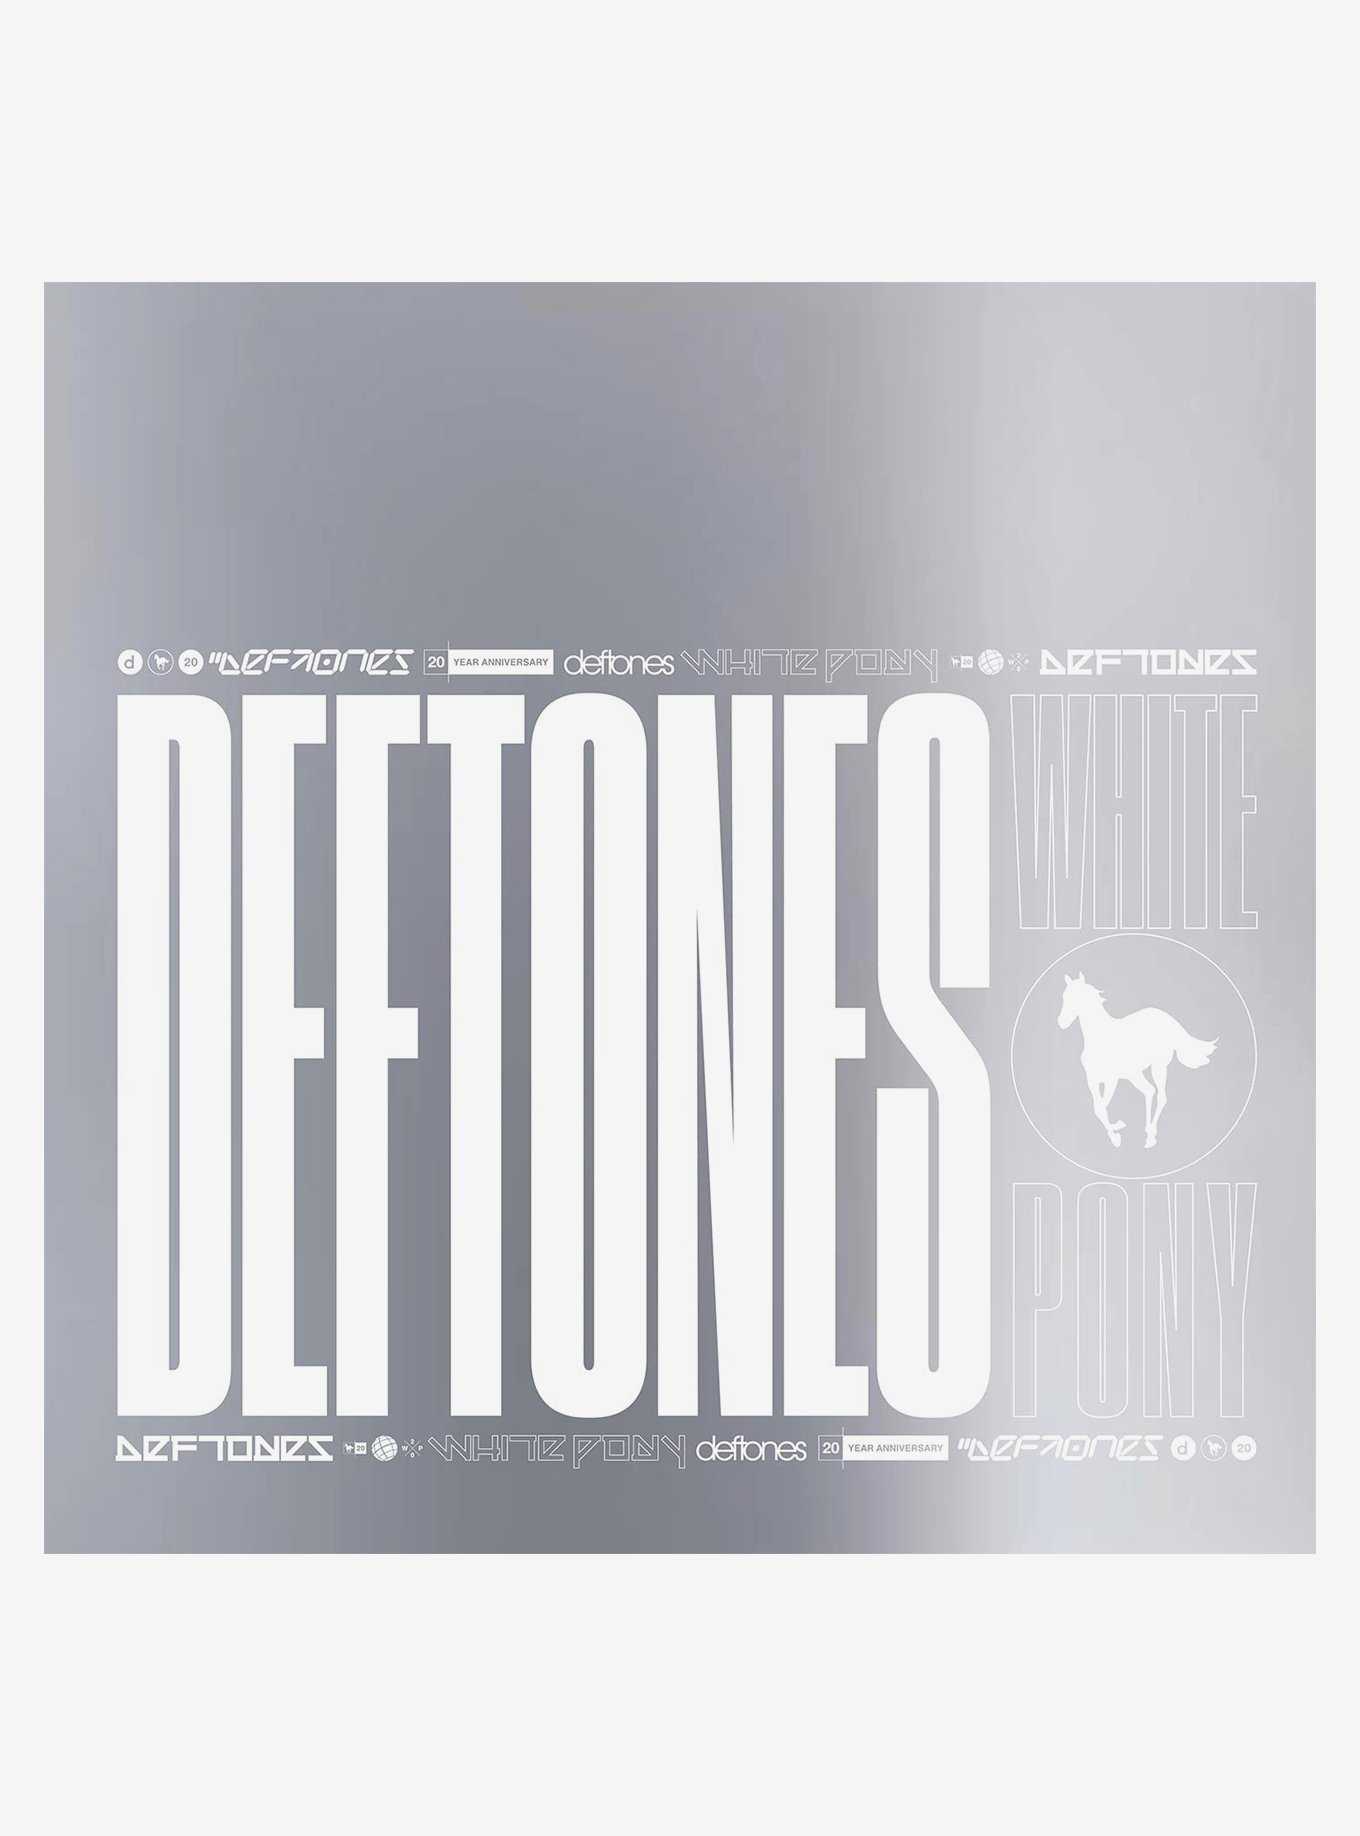 Deftones White Pony (20th Anniversary) Vinyl LP, , hi-res